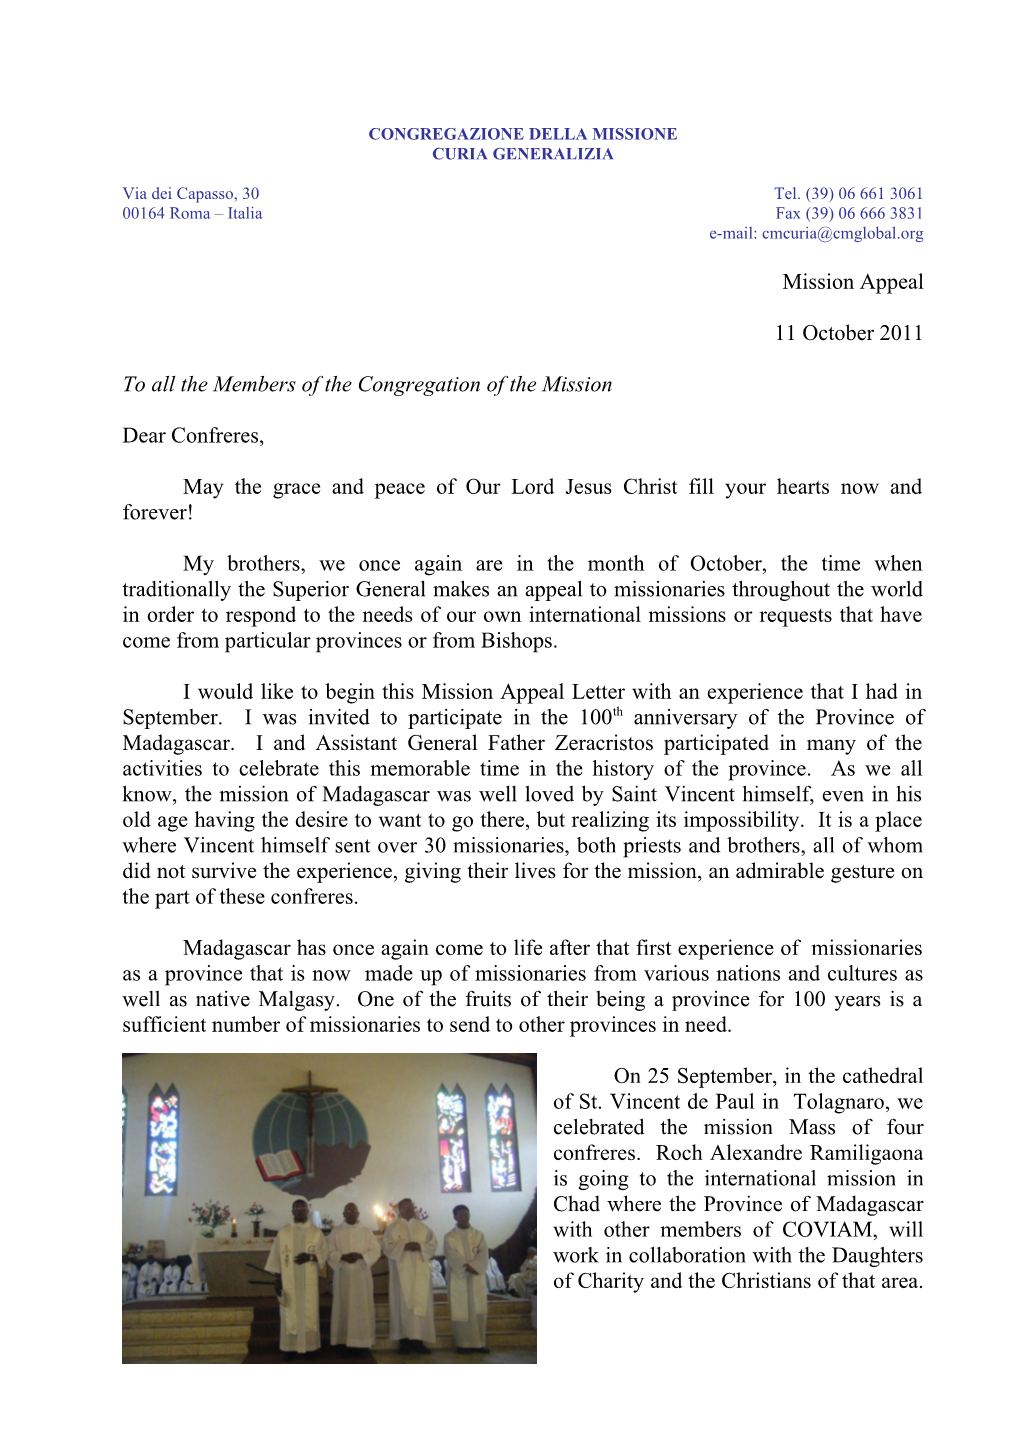 Mission Appeal Letter